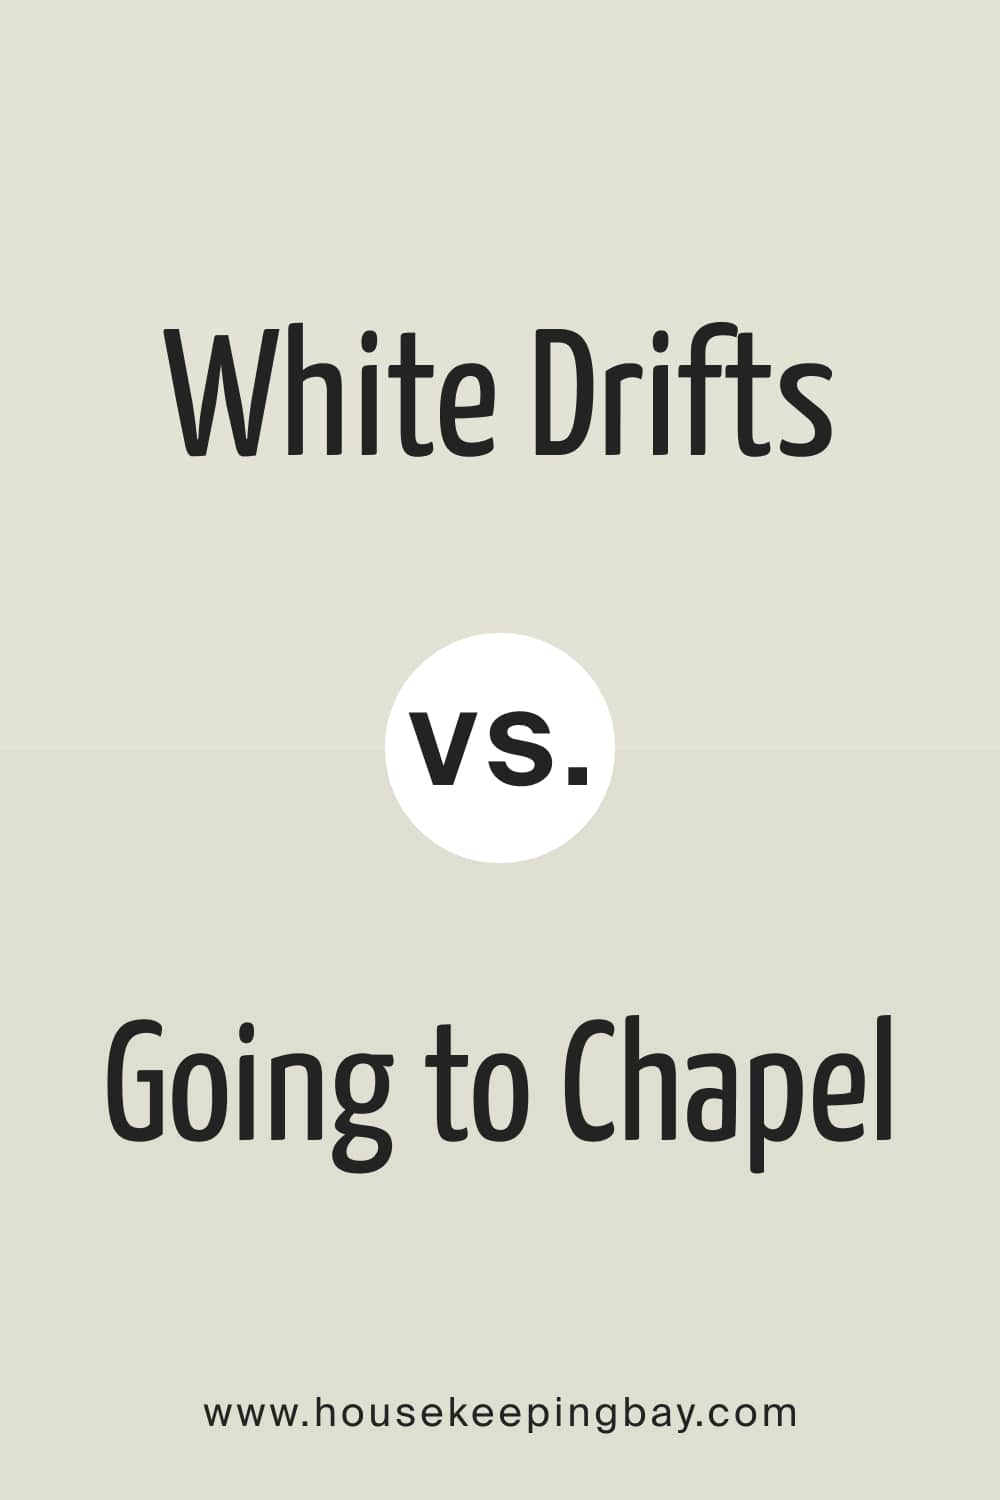 White Drifts vs Going to Chapel